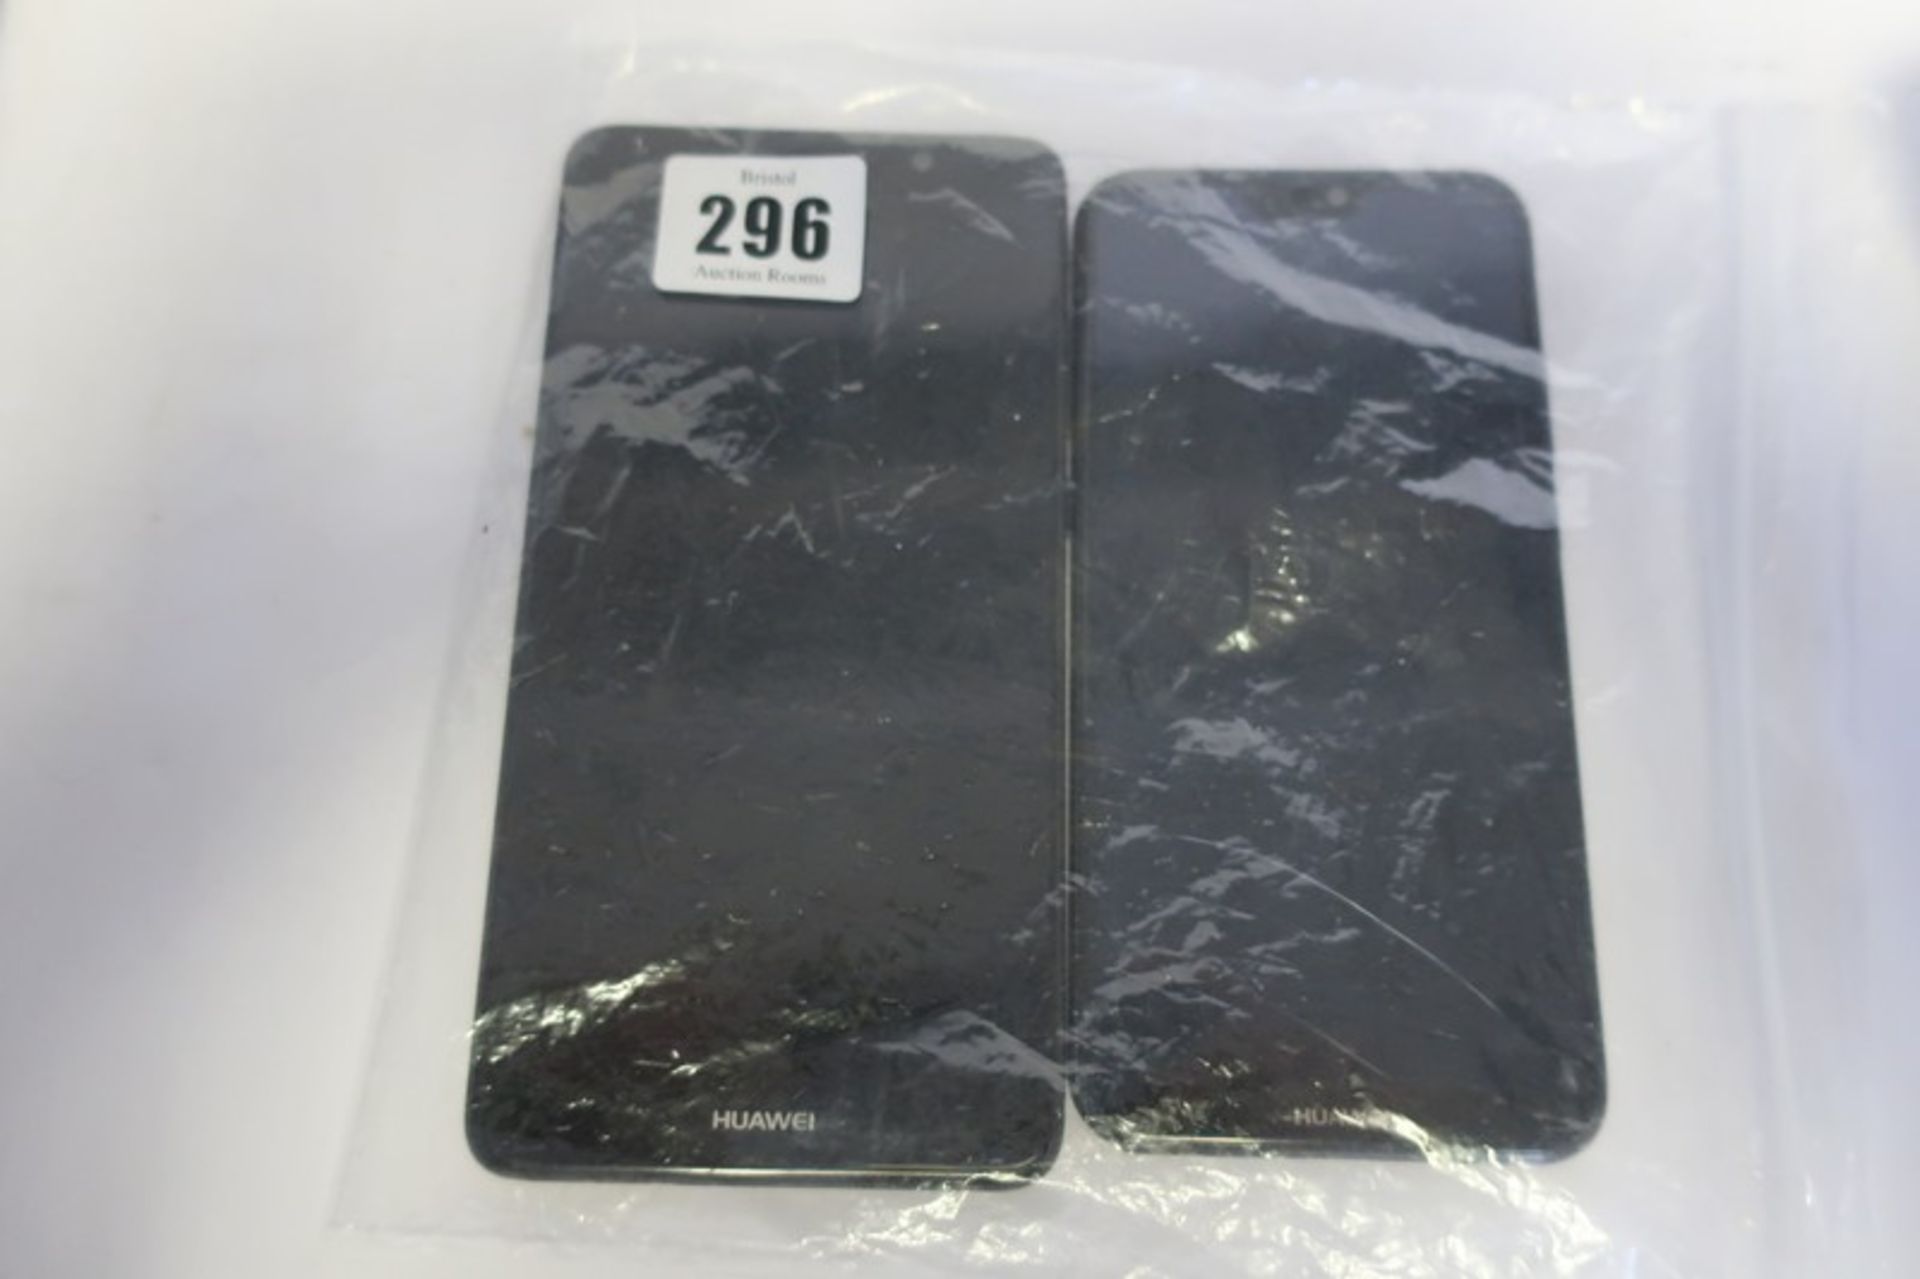 A Huawei P20 Lite ANE-LX1 in Black (Damaged screen glass) and a Huawei Mate 9 MHA-AL00 in Black (